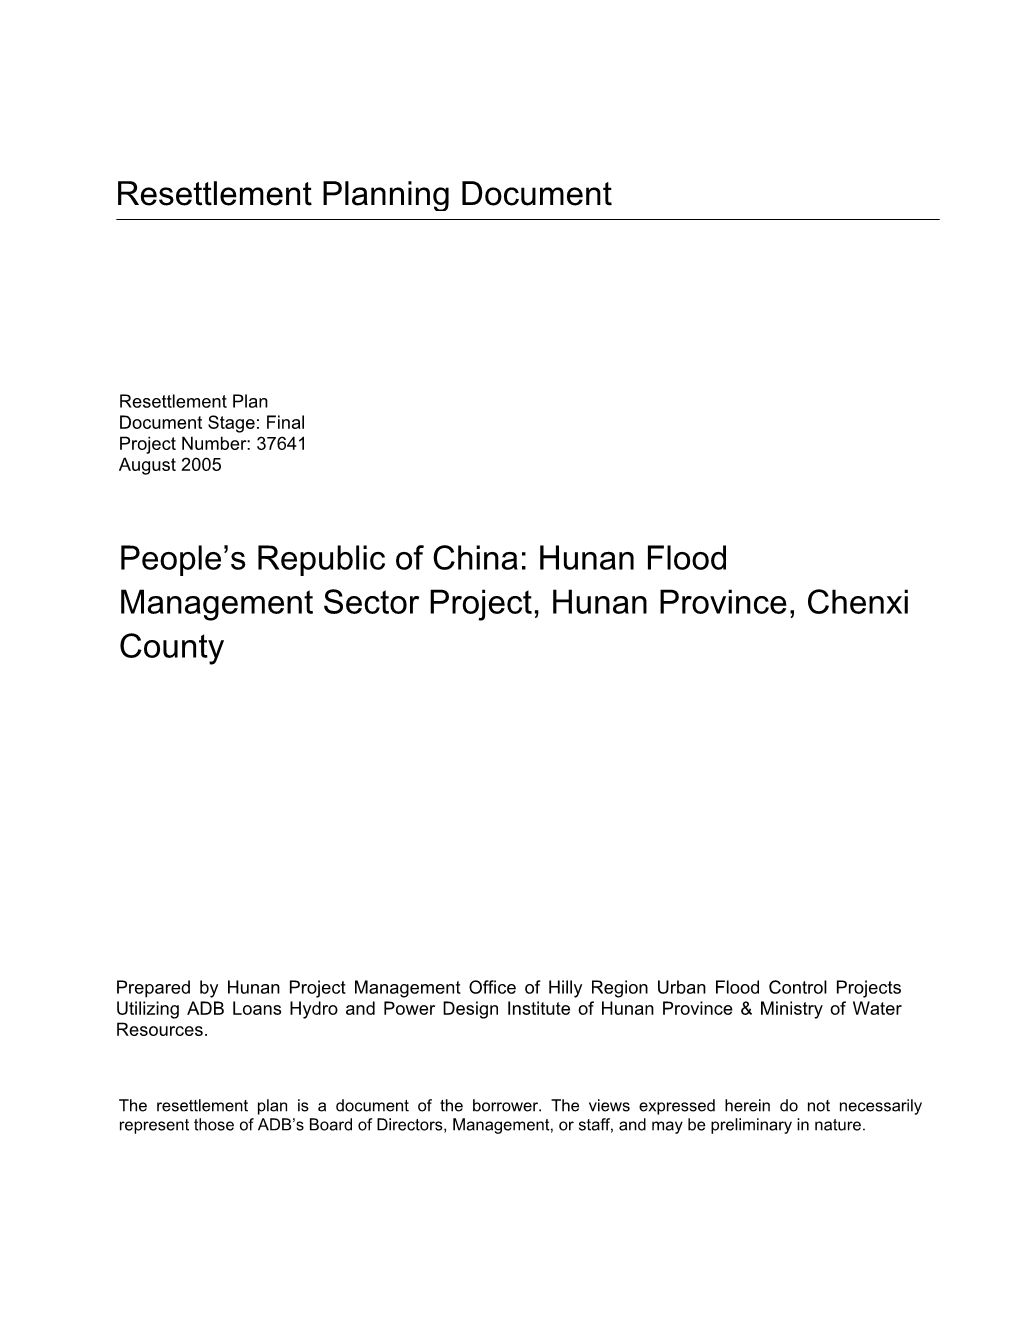 Hunan Flood Management Sector Project, Hunan Province, Chenxi County